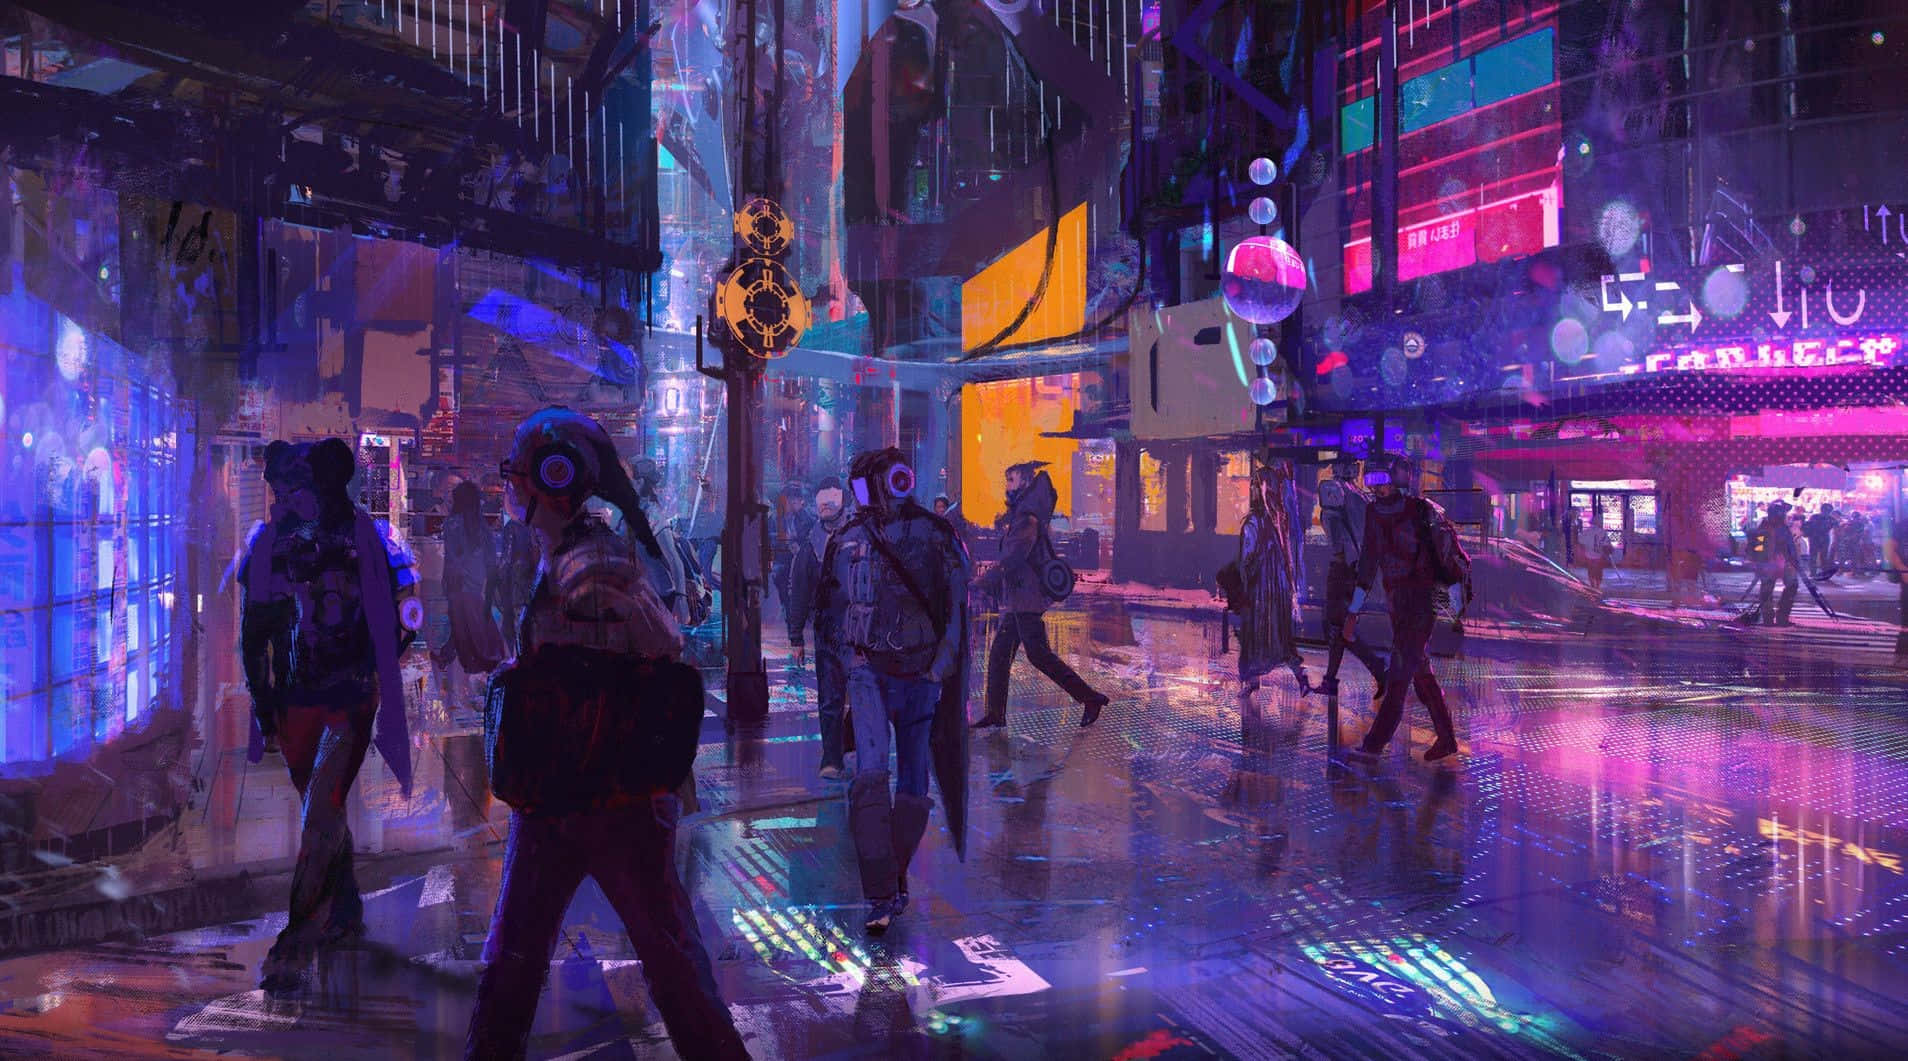 Japan Cyberpunk Theme Picture